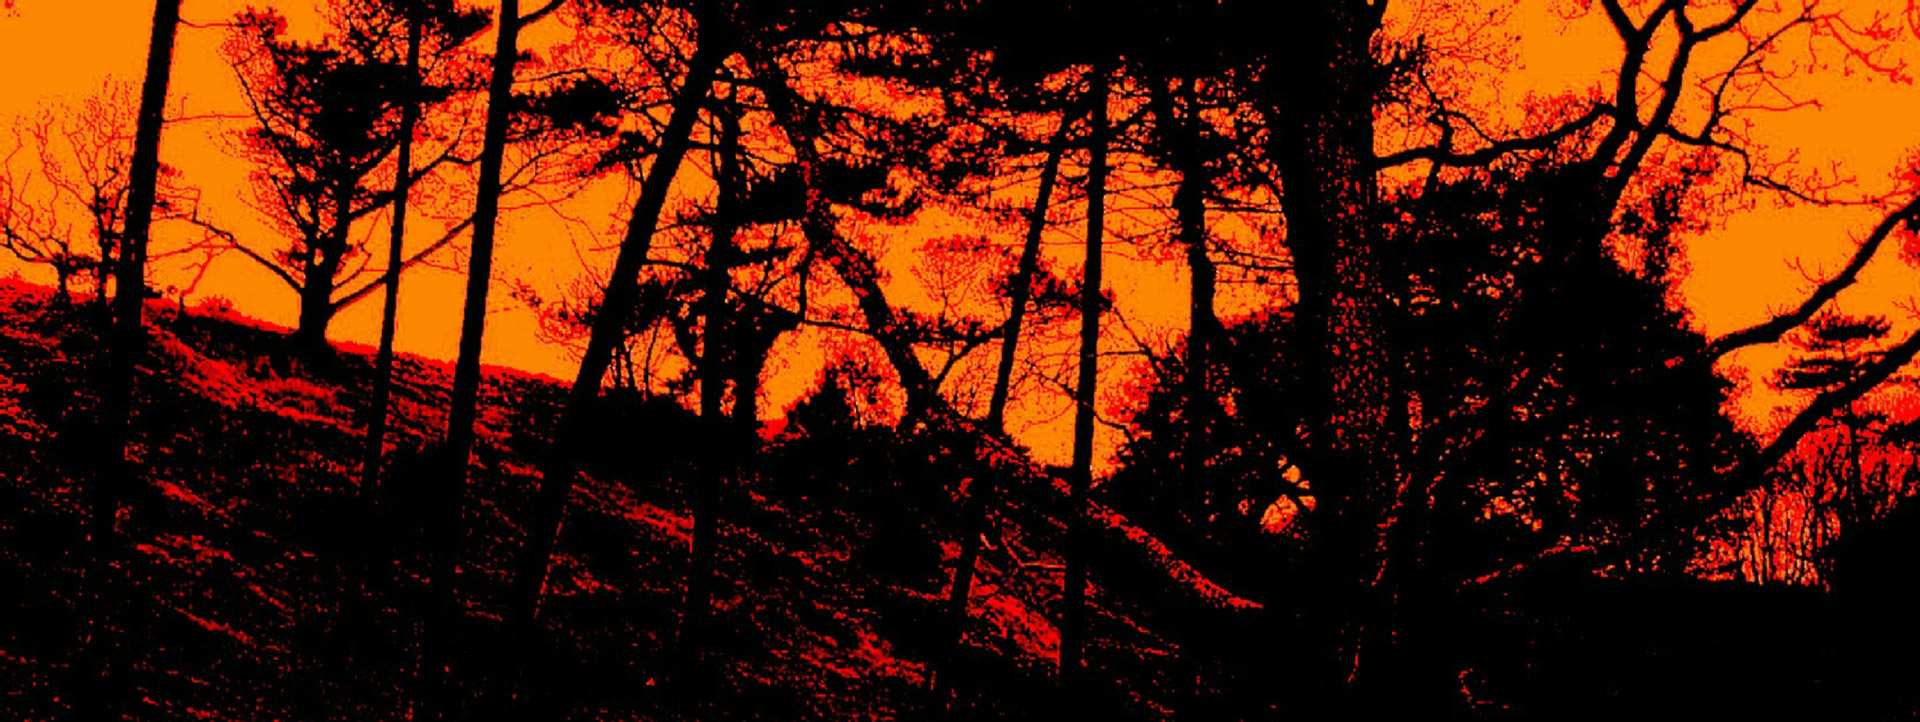 Dark Forest Images - Free Download on Freepik